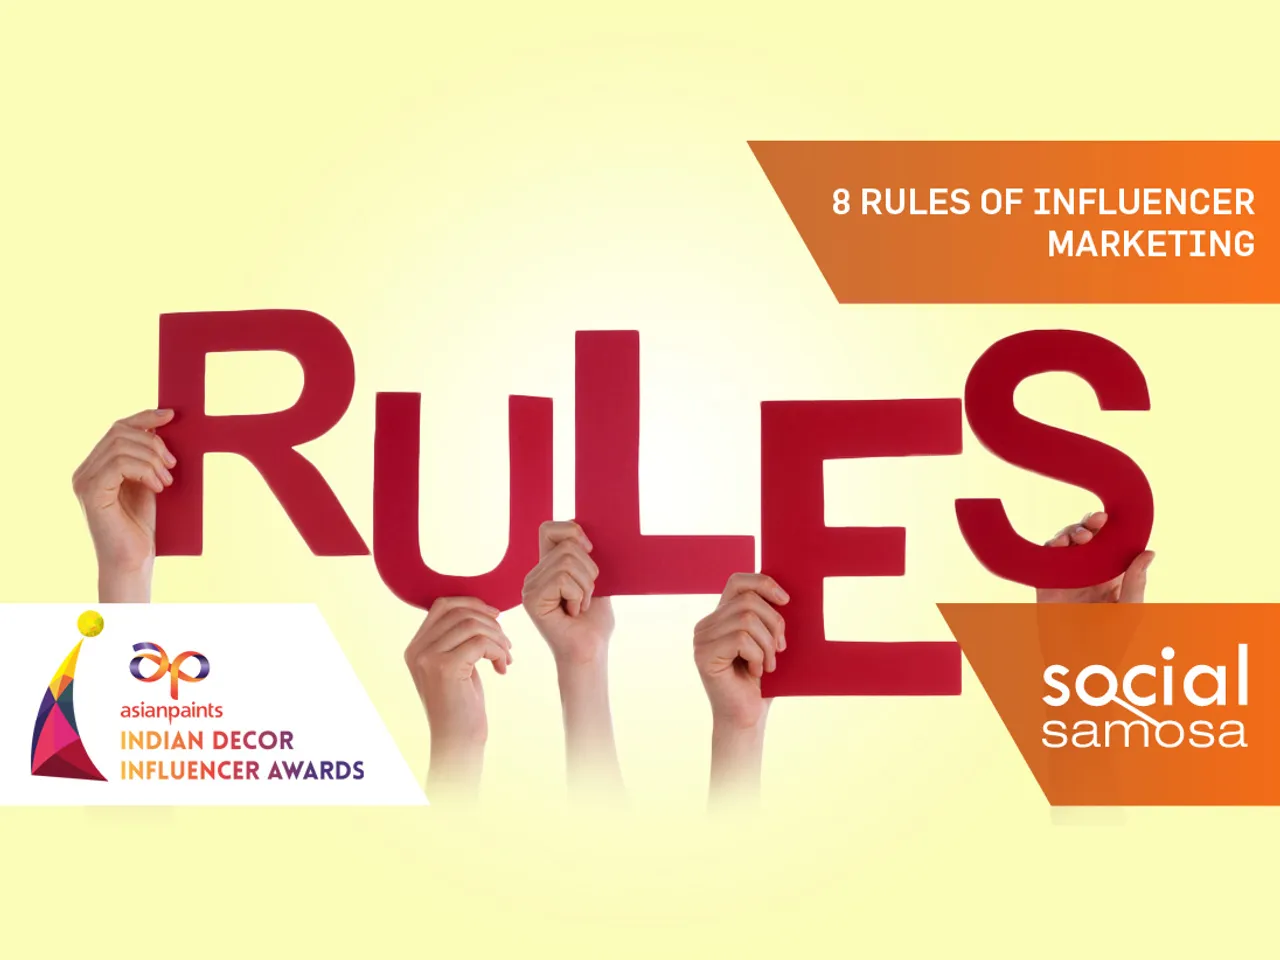 8 golden rules of influencer marketing